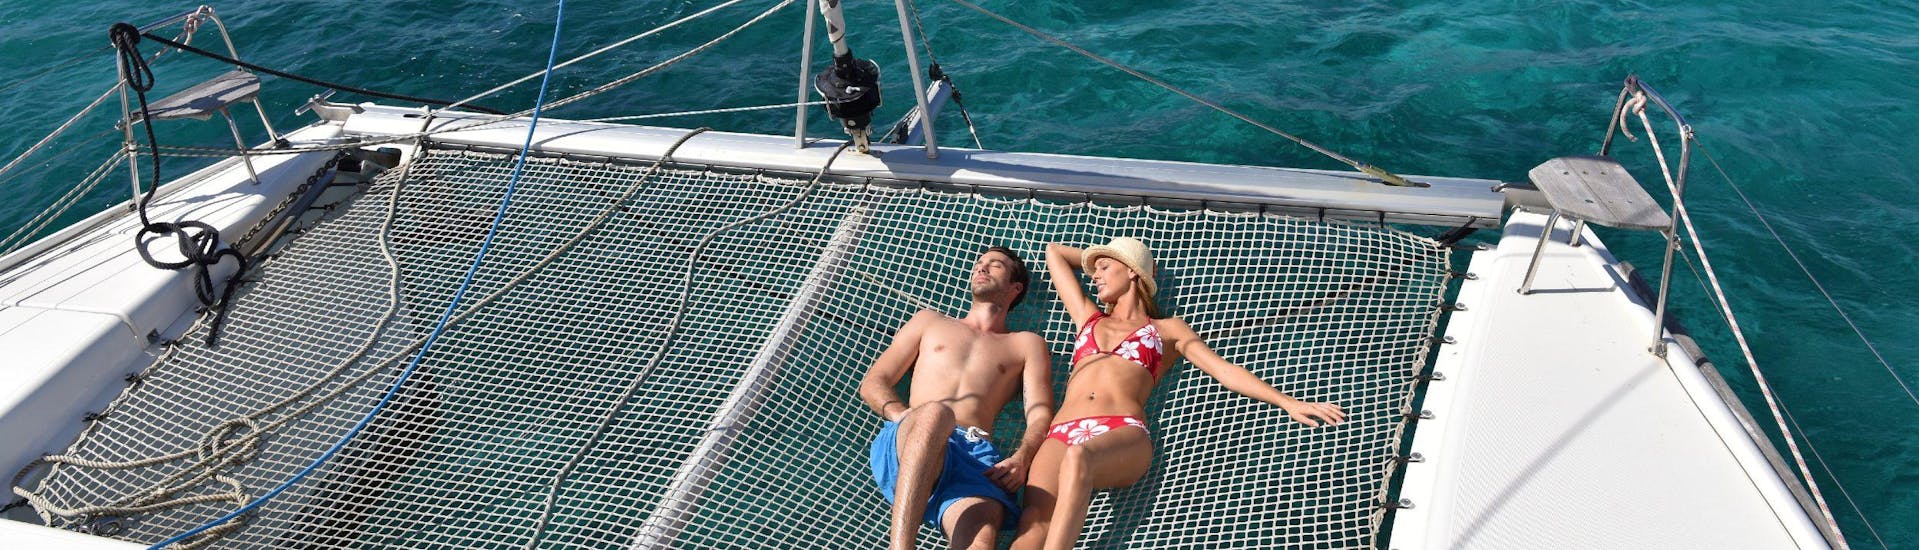 Una pareja toma el sol a bordo de un catamarán.